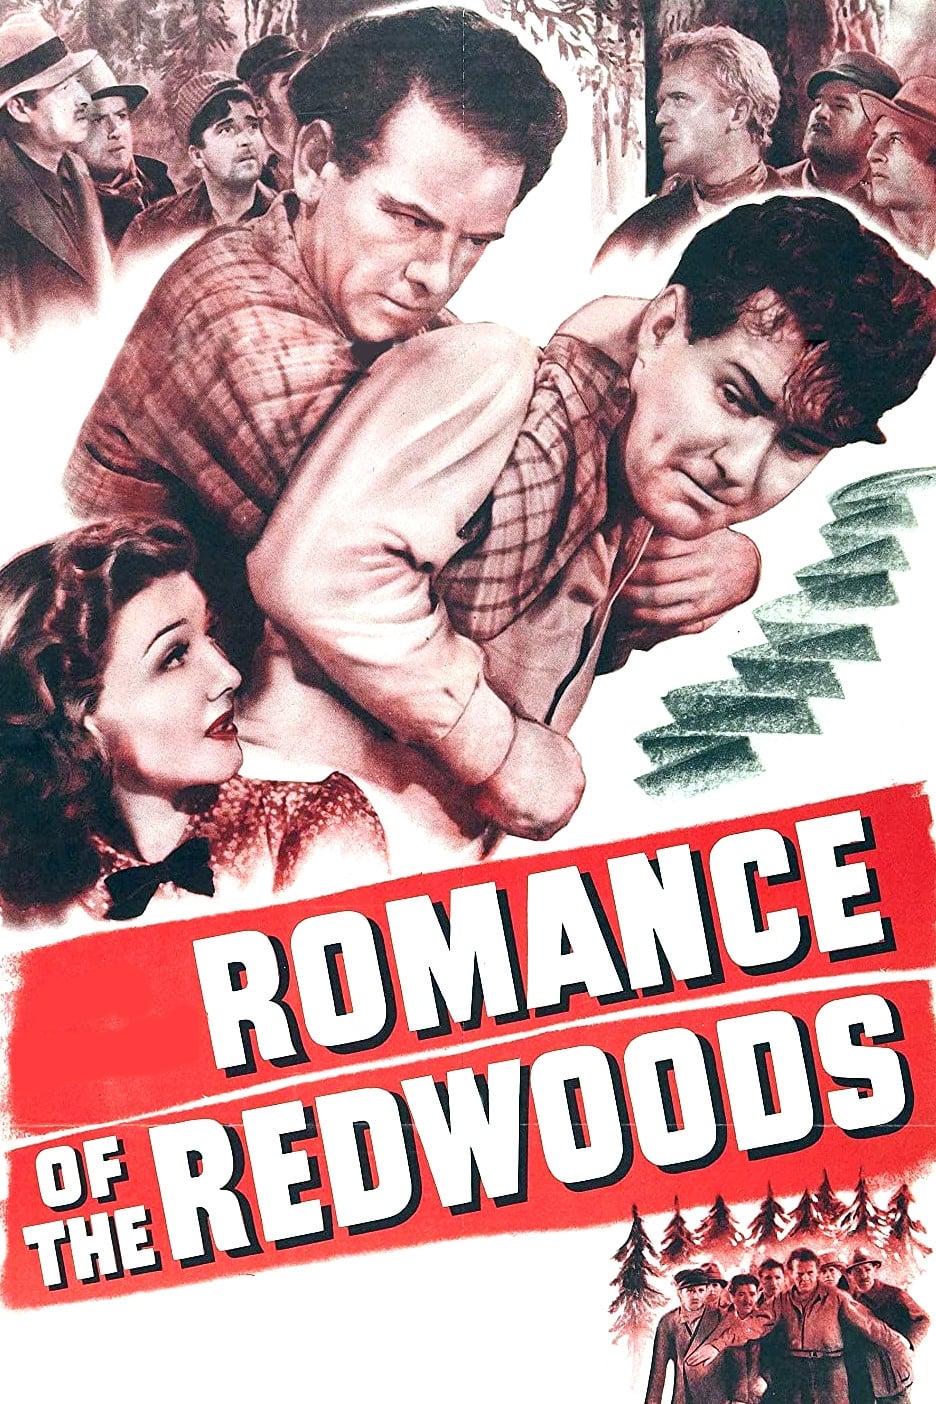 Romance of the Redwoods (1939)